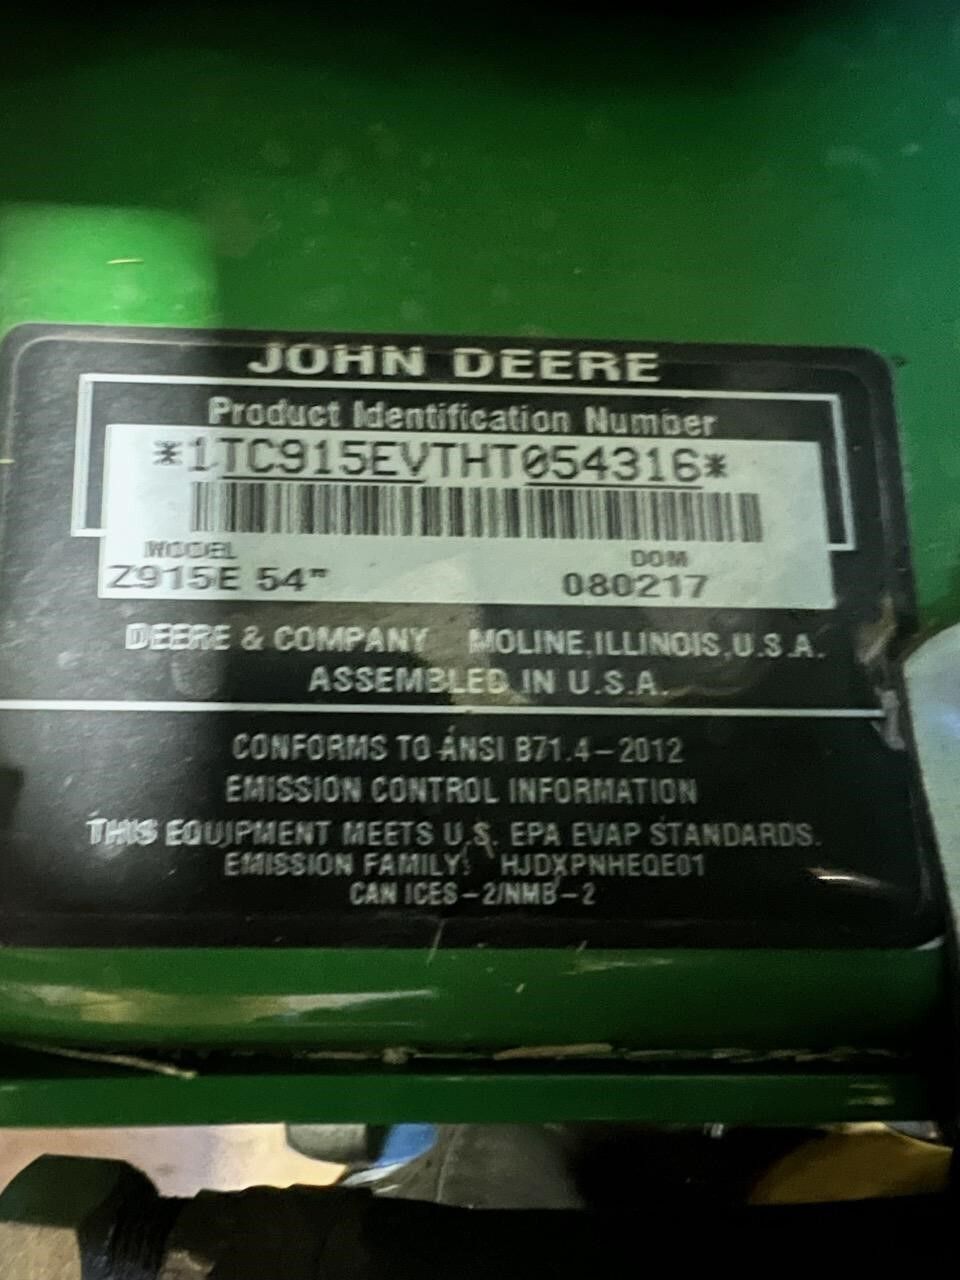 2017 John Deere Z915E